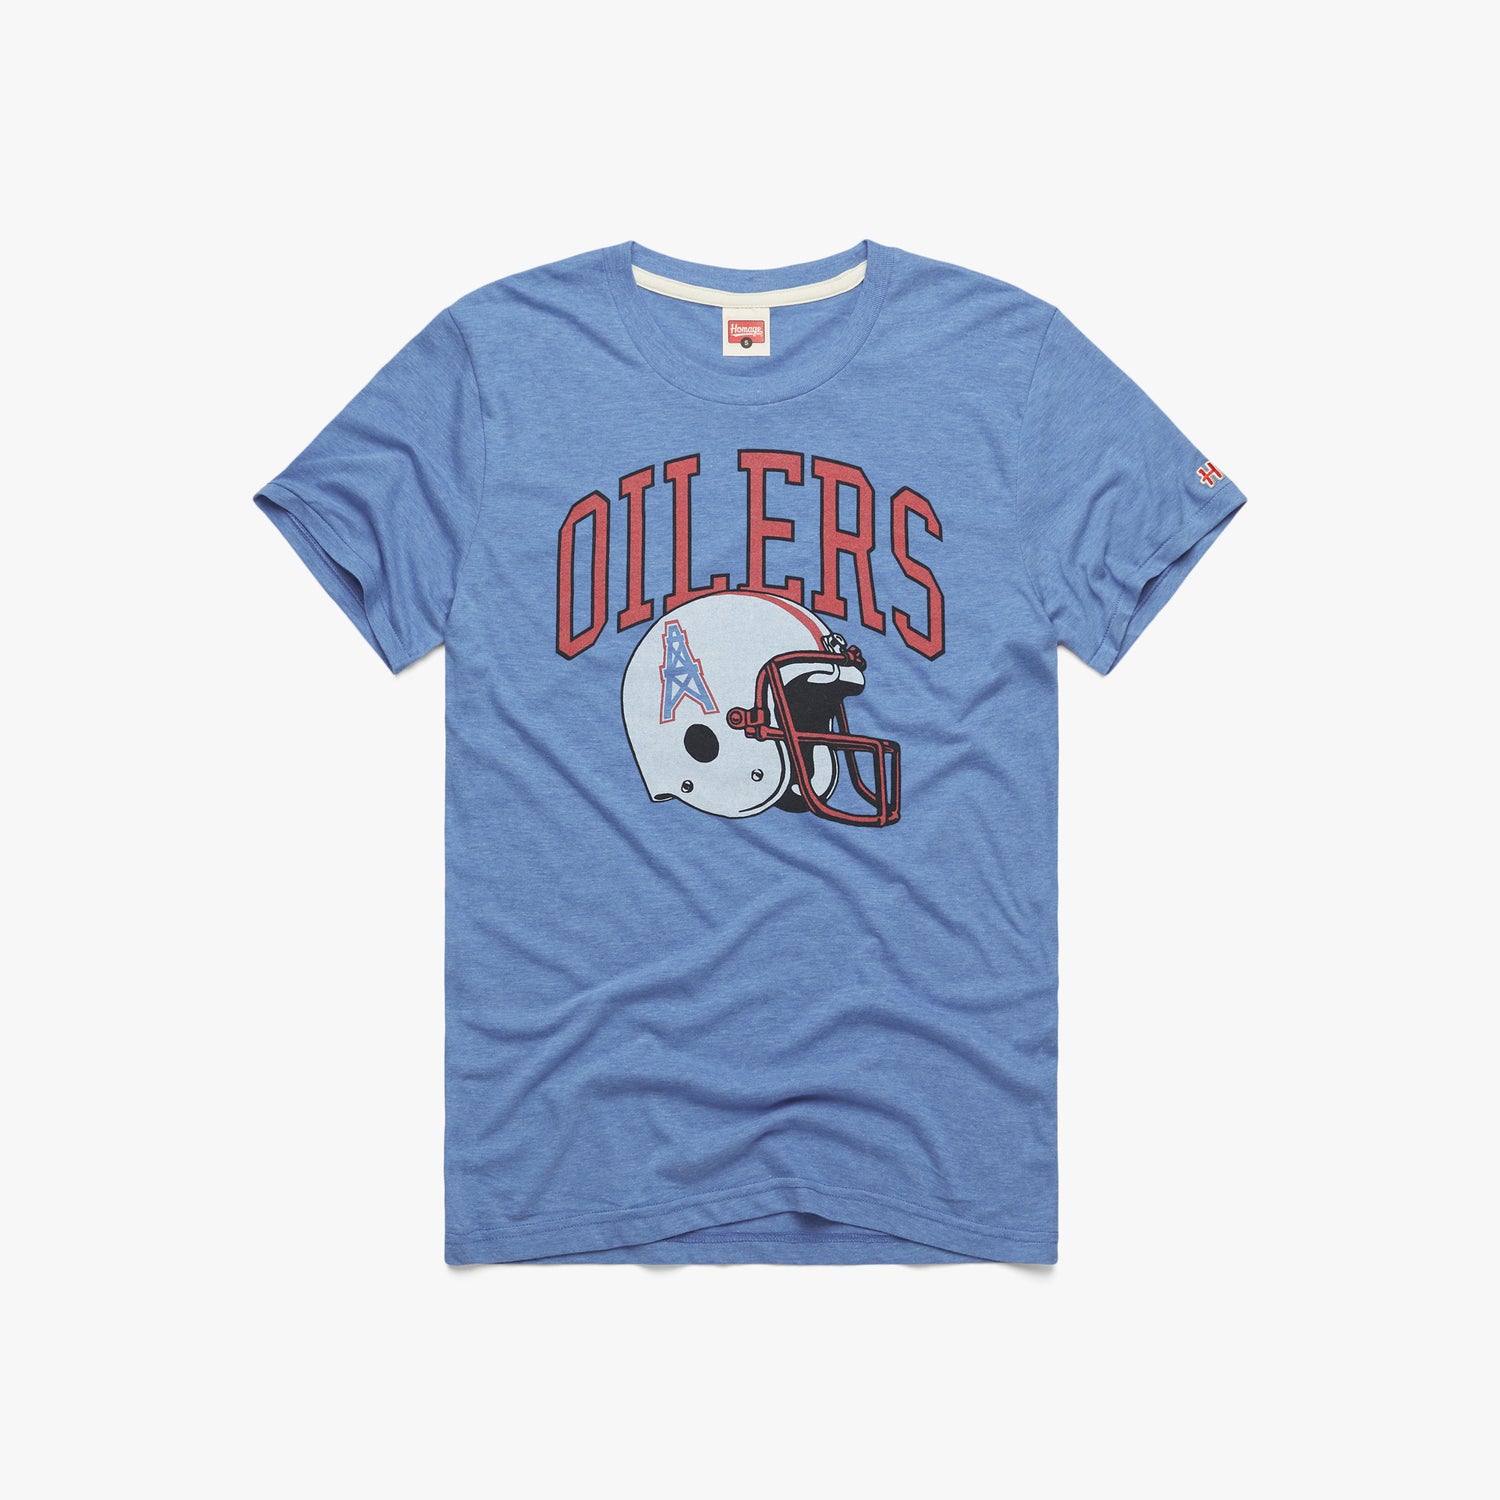 Edmonton Oilers Kids Apparel, Oilers Youth Jerseys, Kids Shirts